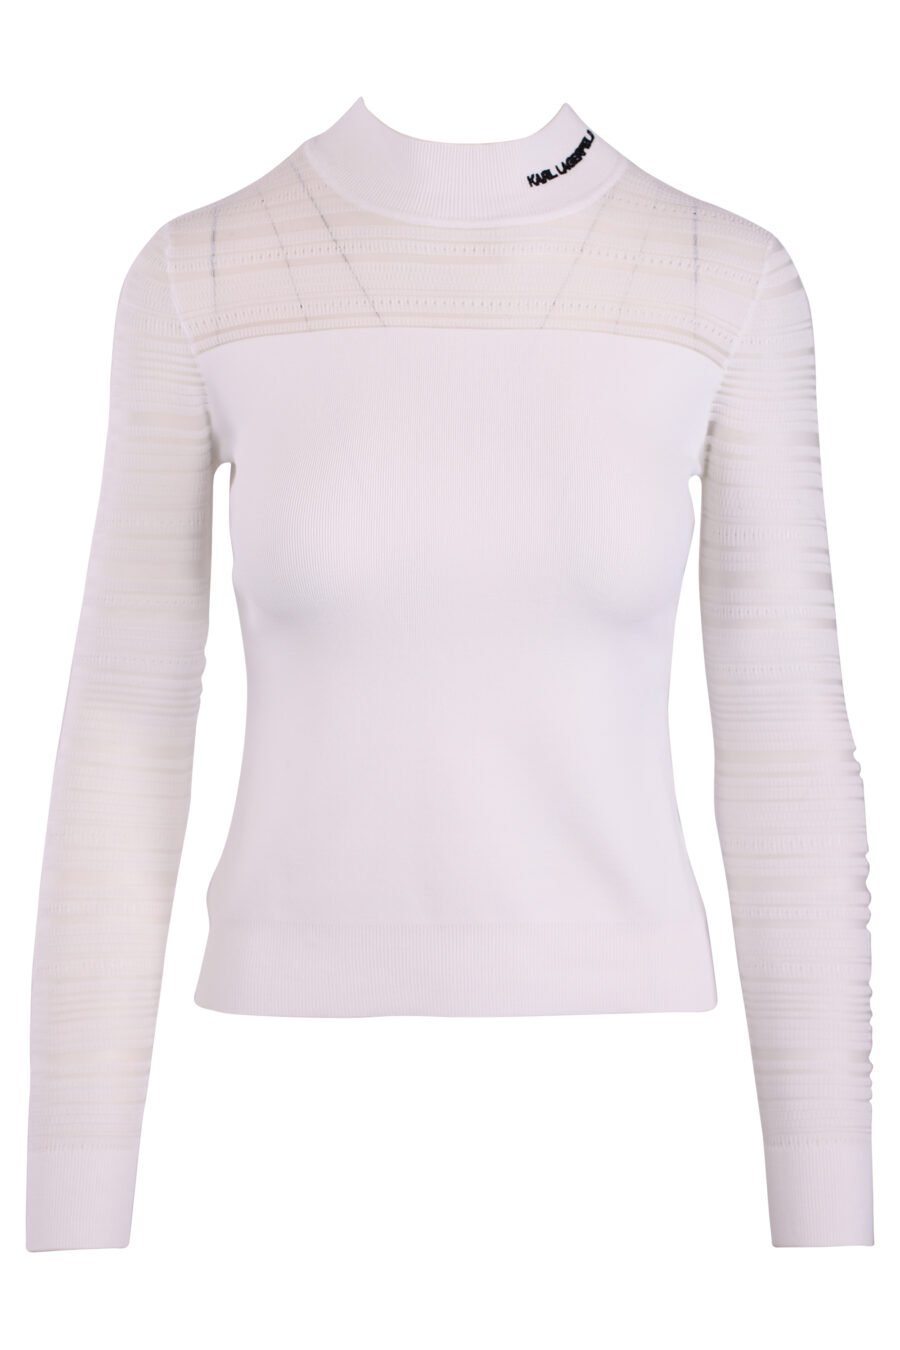 Camiseta blanca manga larga semitransparente - IMG 3261